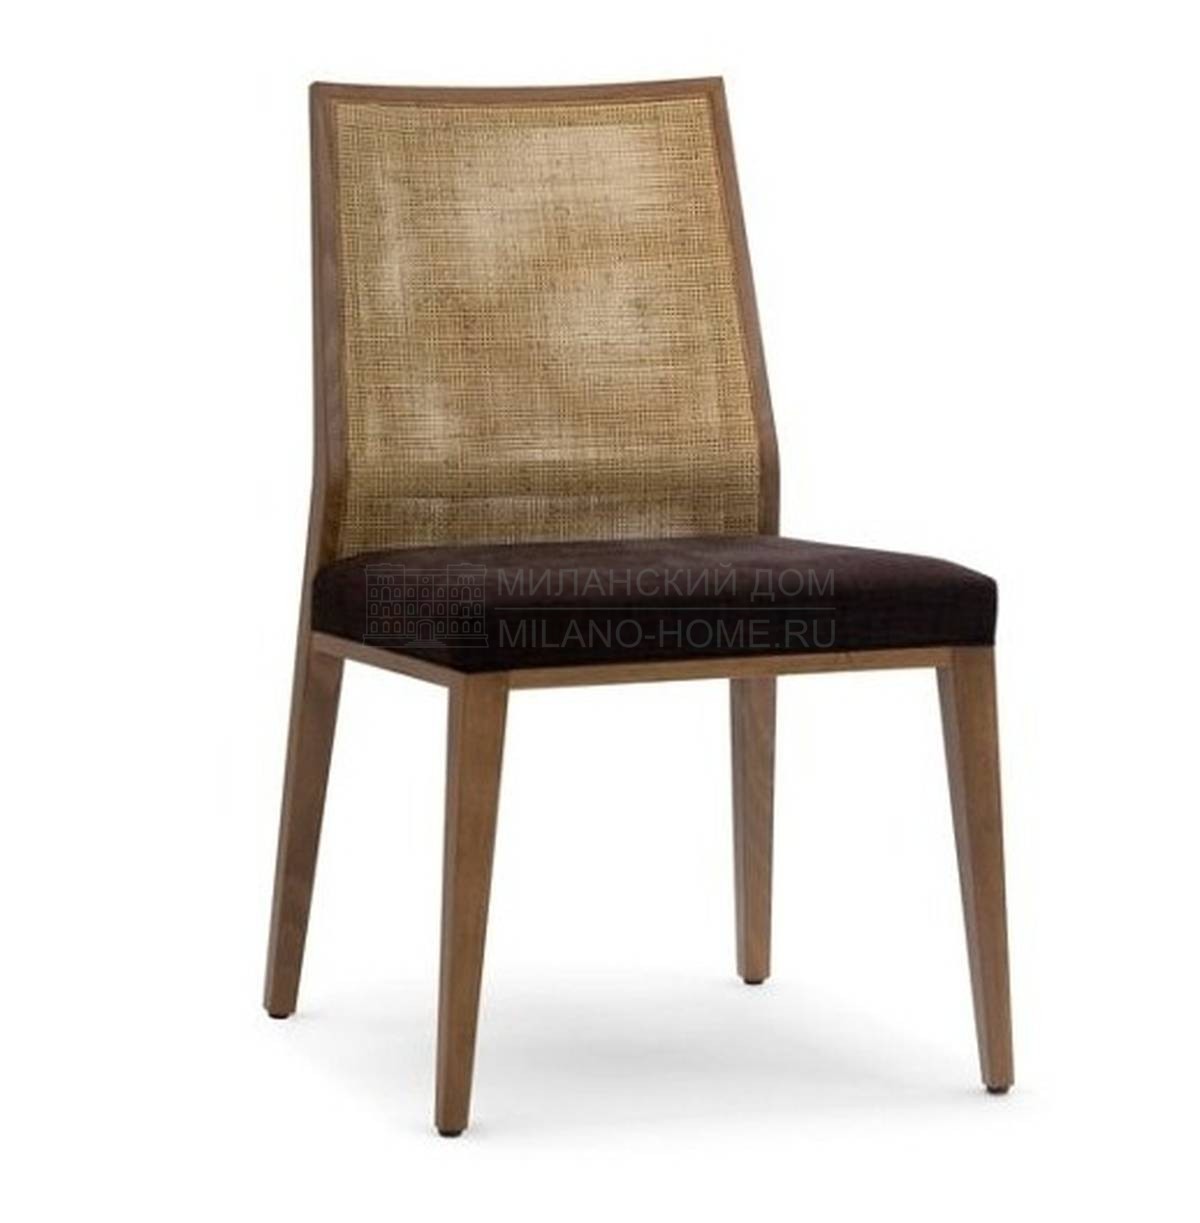 Стул Queen chair из Франции фабрики ROCHE BOBOIS